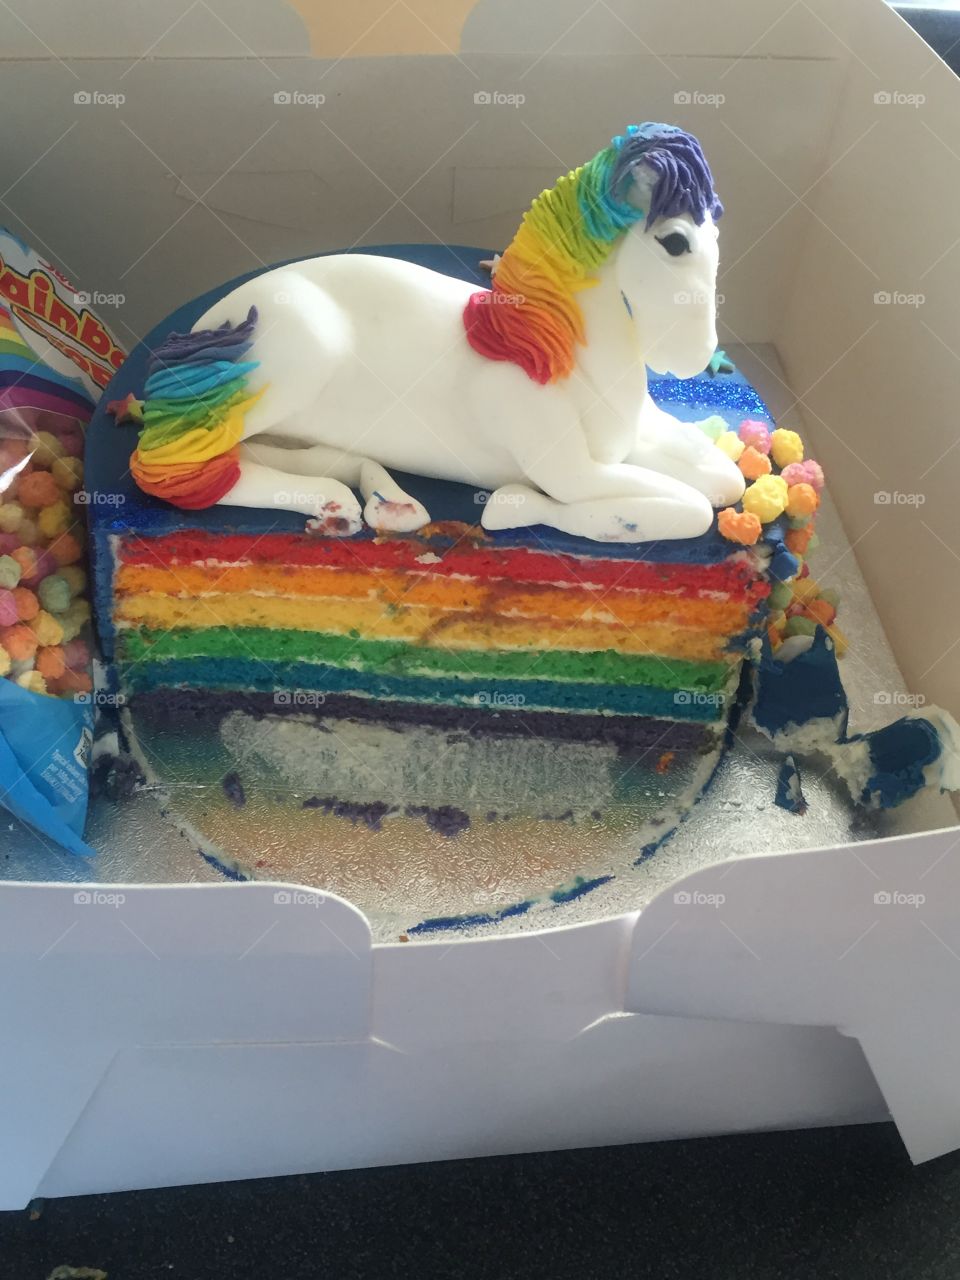 Rainbow sponged birthday cake!